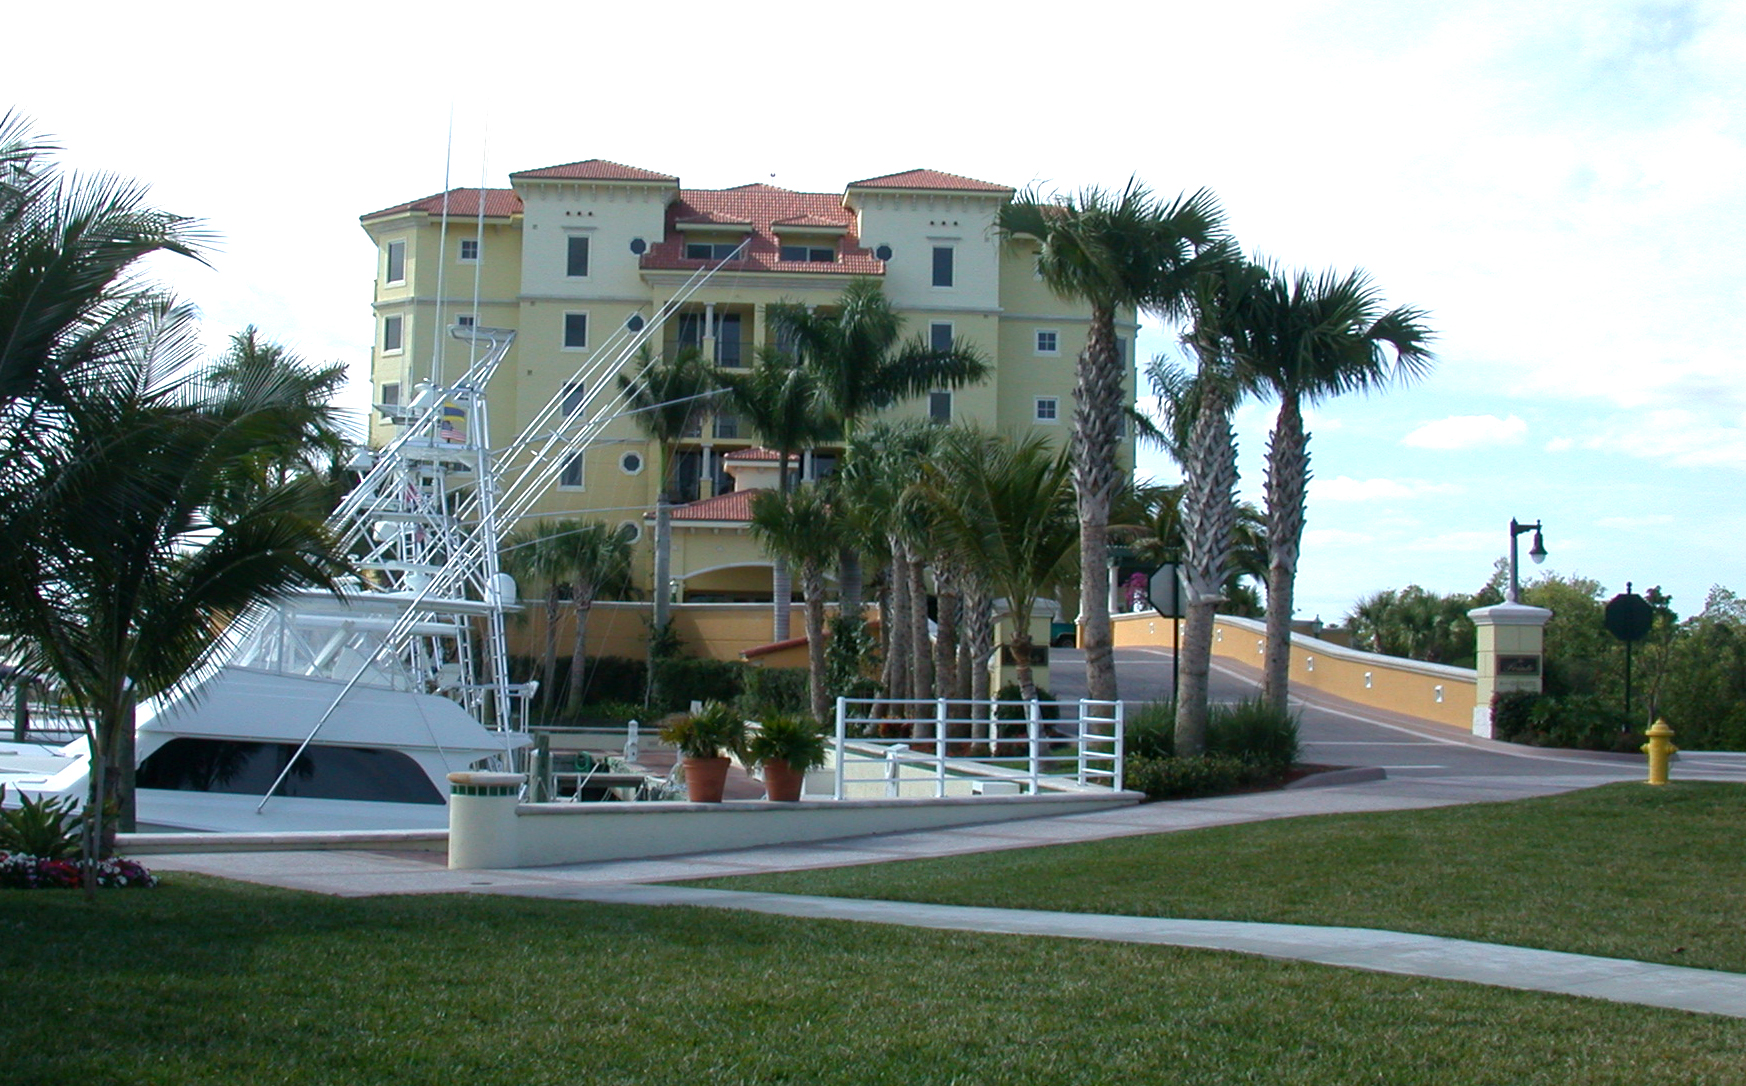 Jupiter Yacht Club Florida Pointe Building.JPG